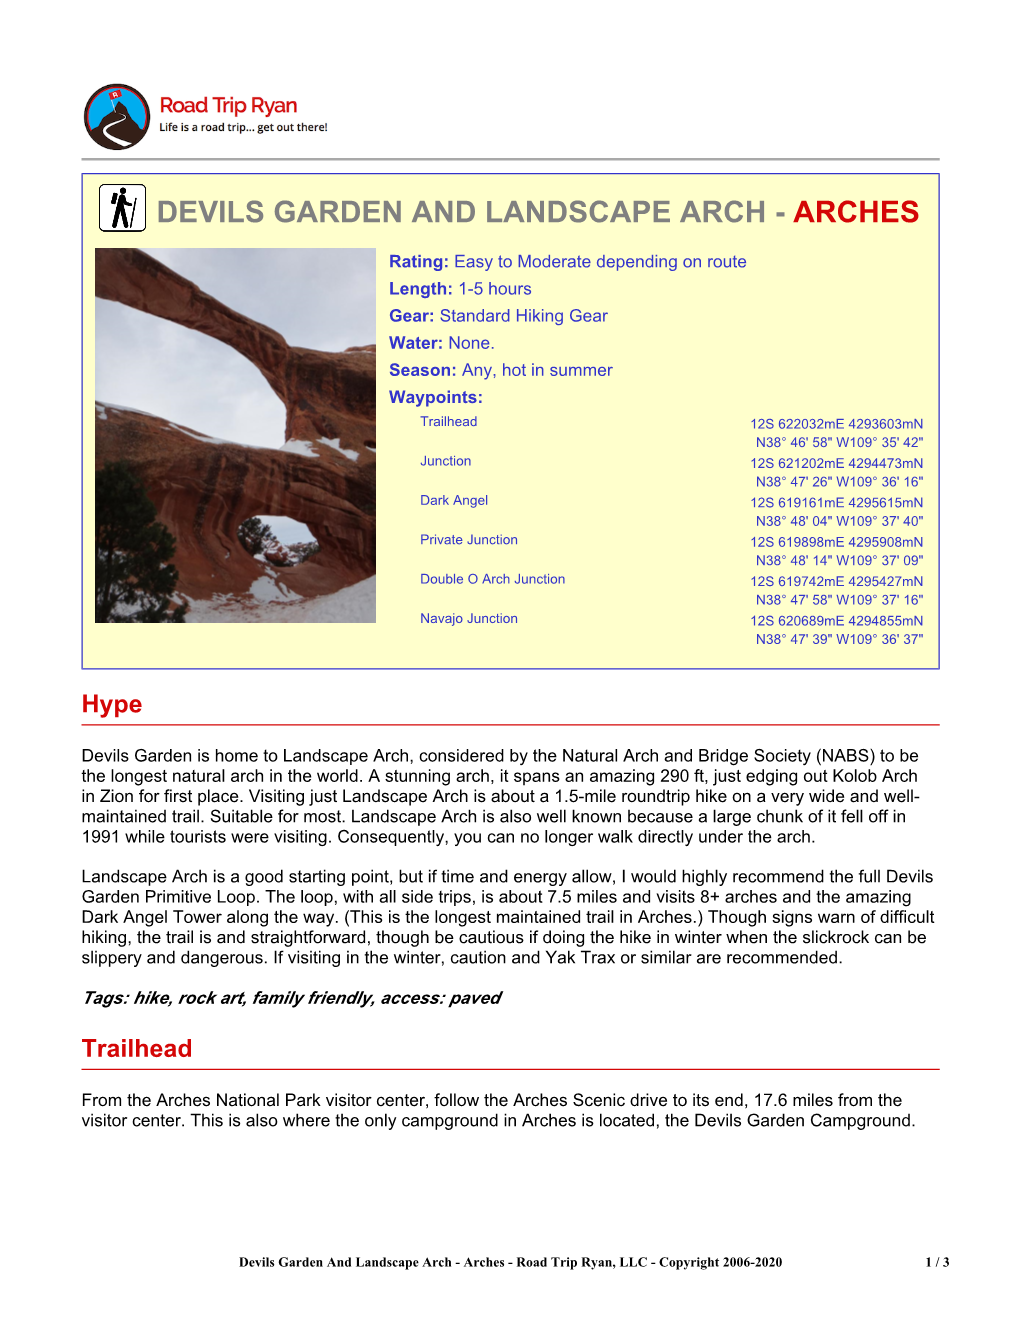 Devils Garden and Landscape Arch - Arches